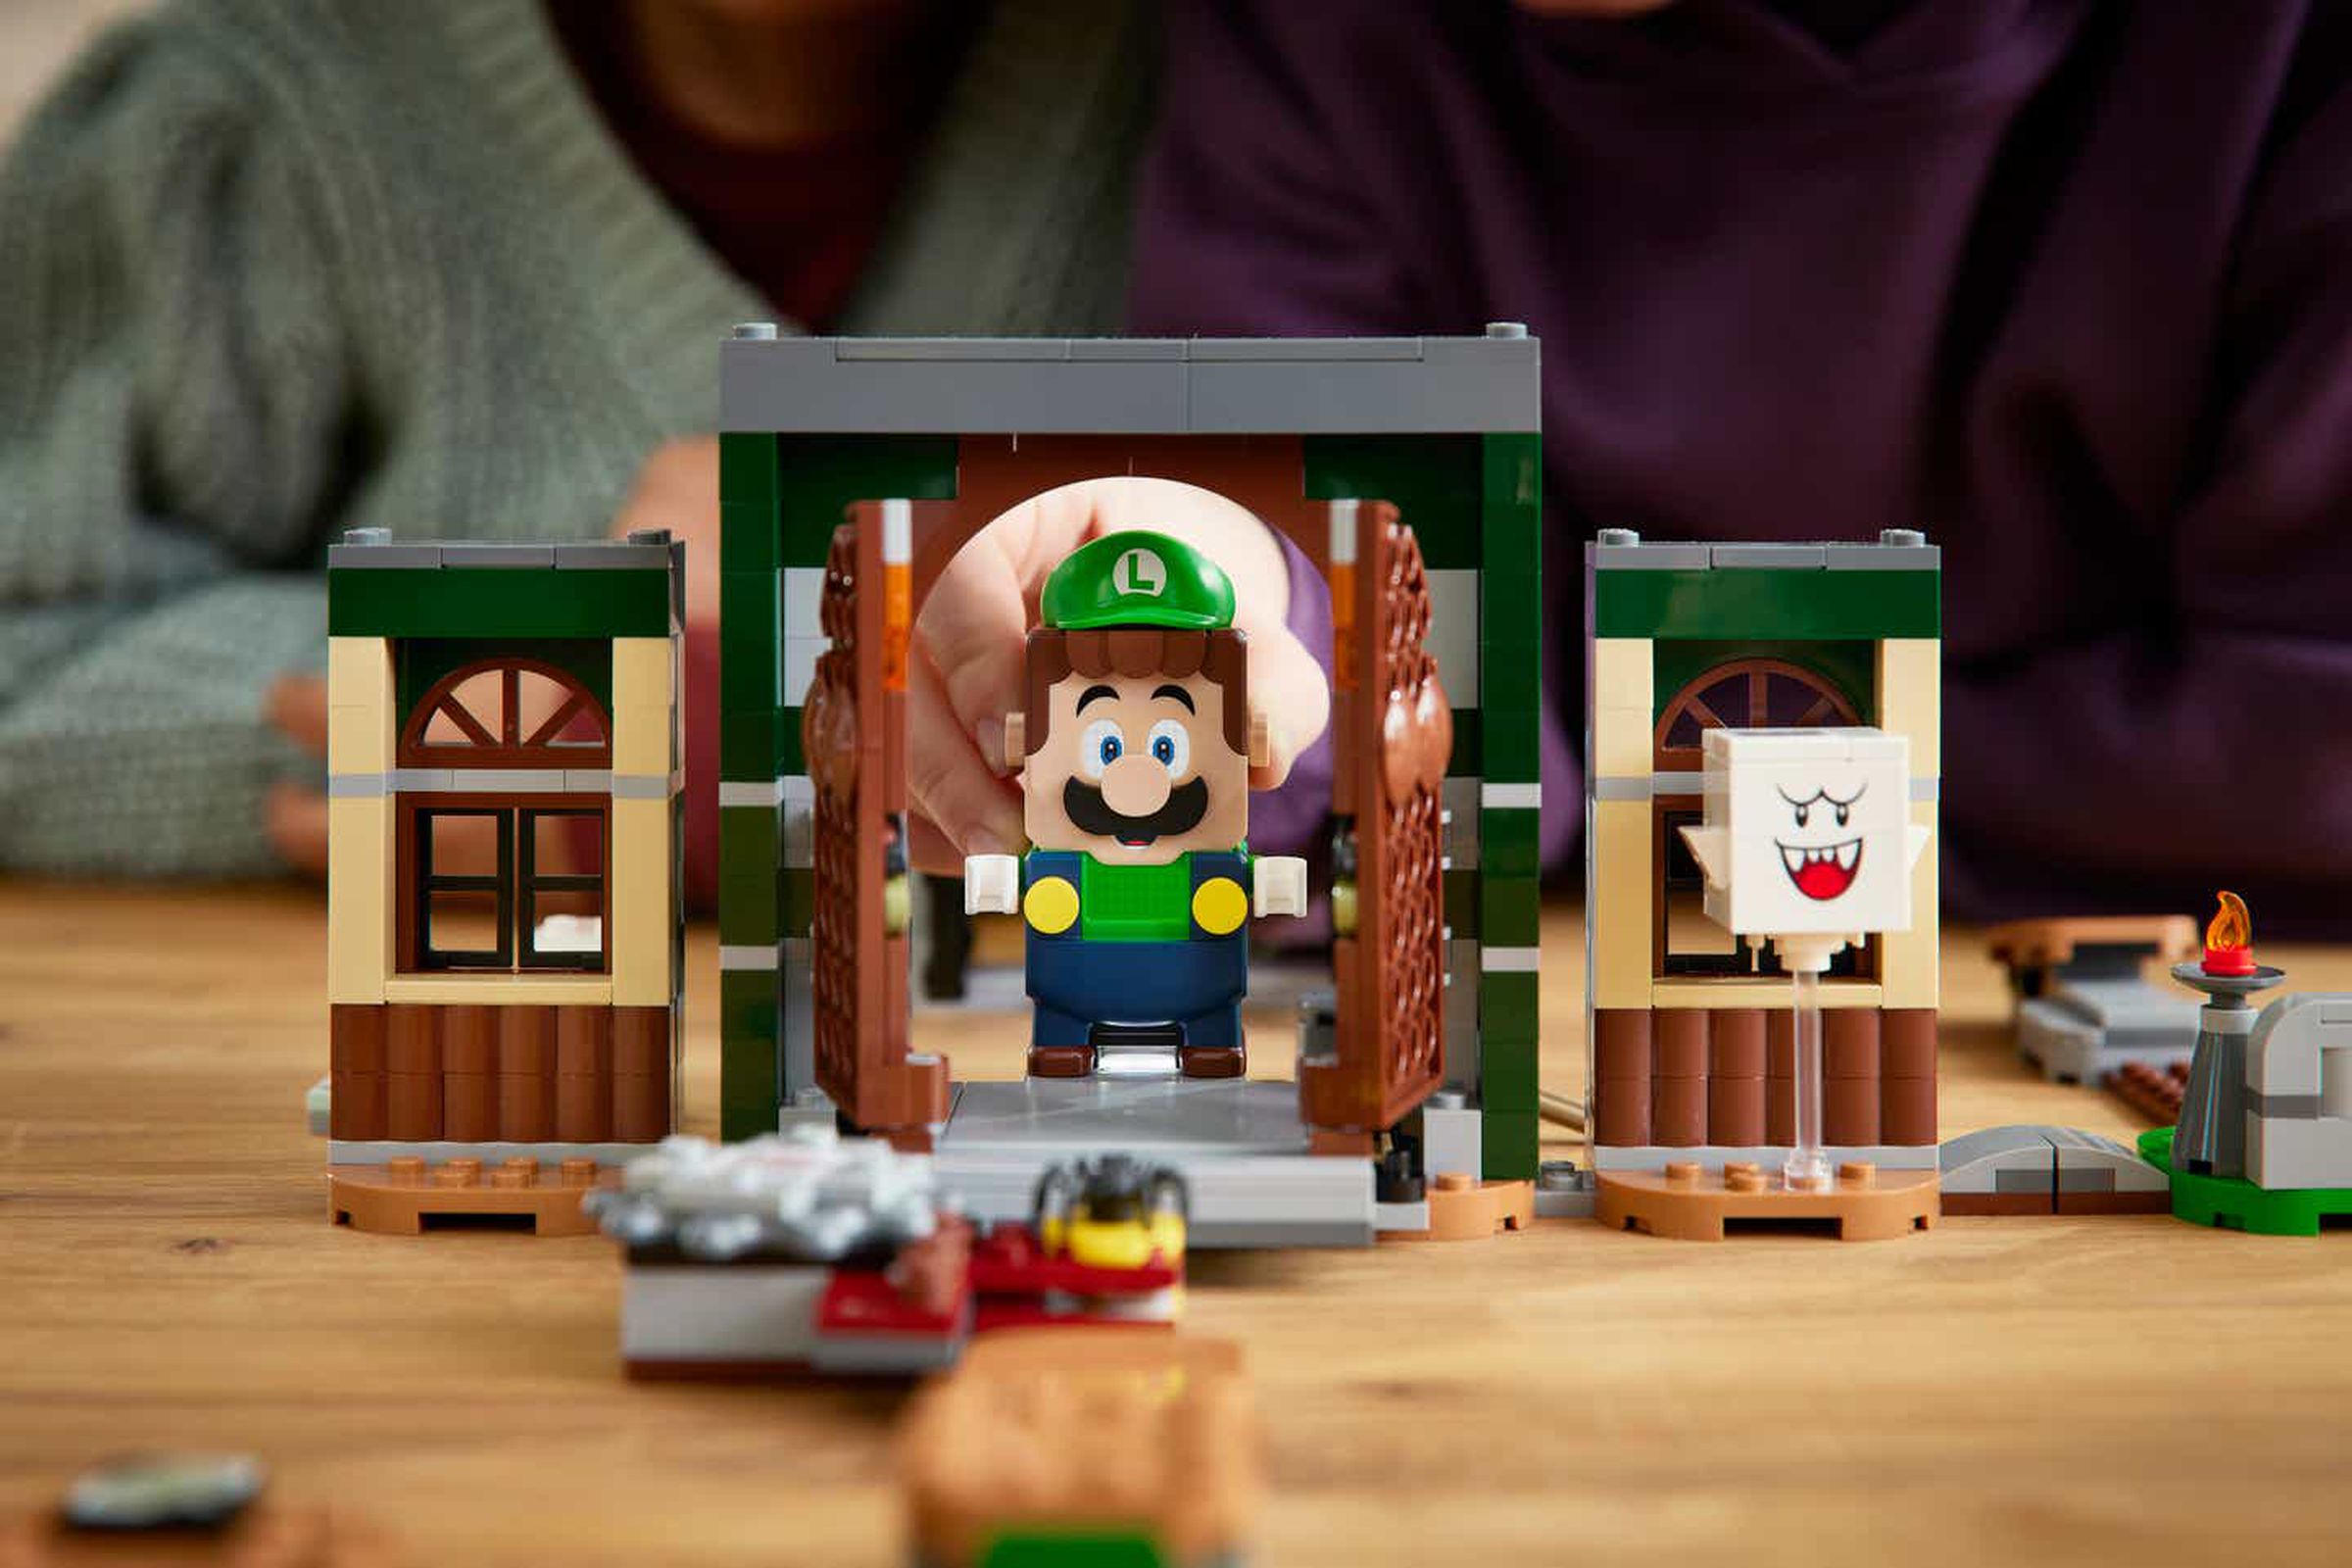 Luigi’s Mansion Lego set